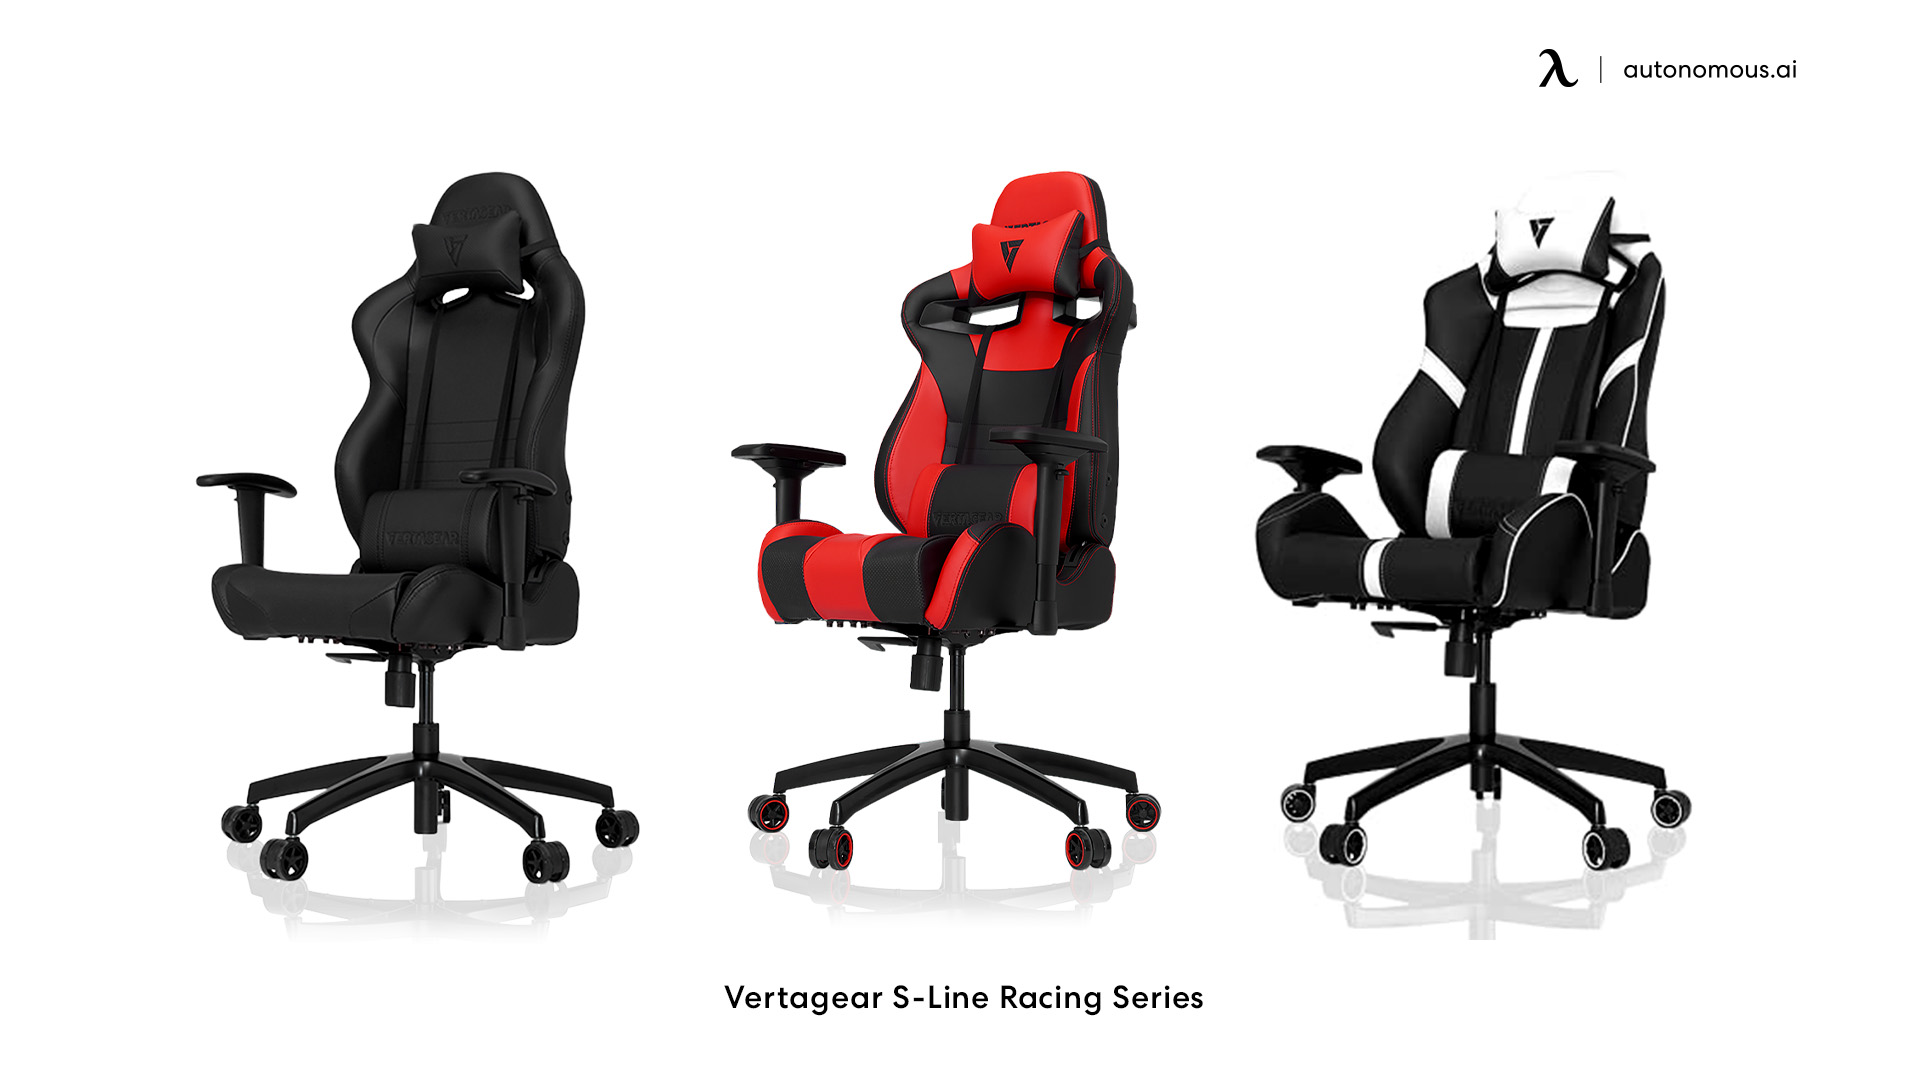 Vertagear S-Line Racing Series best gaming chair under $300